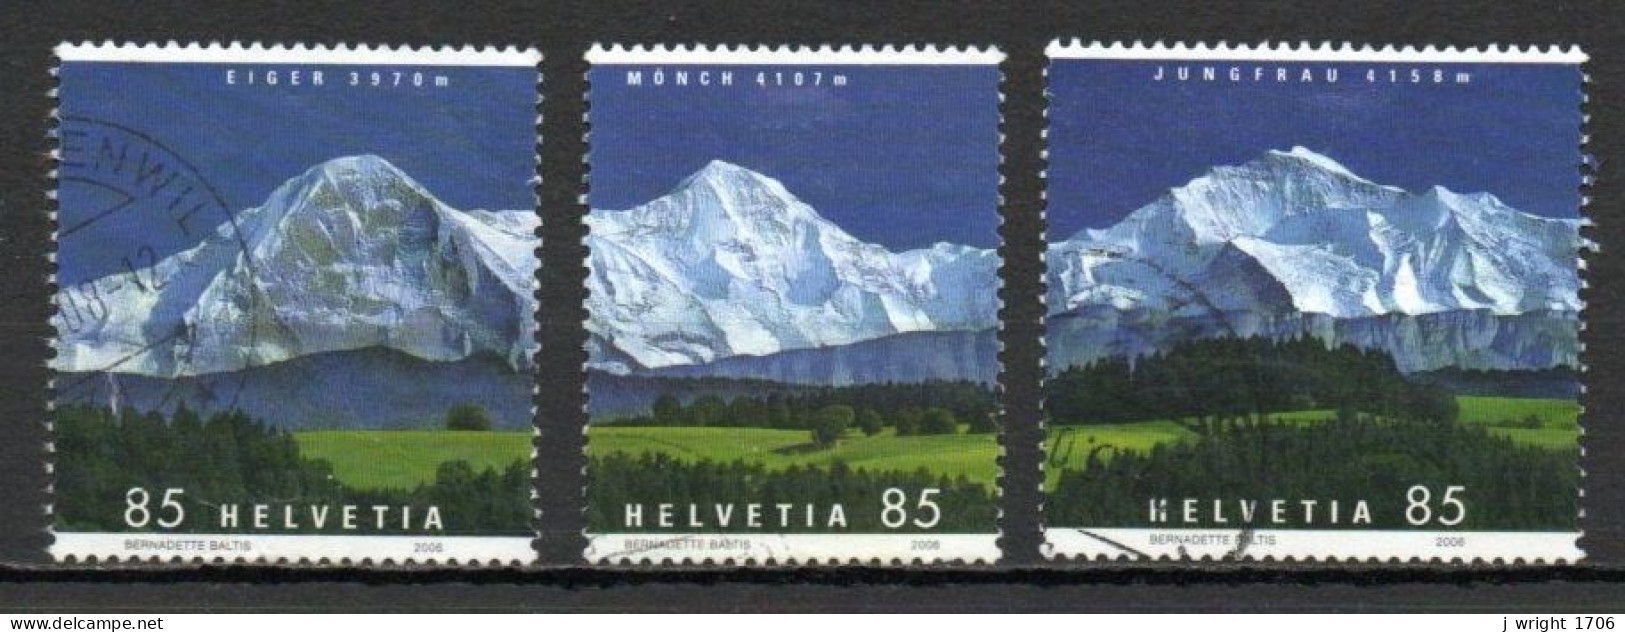 Switzerland, 2006, Mountains, Set, USED - Gebruikt